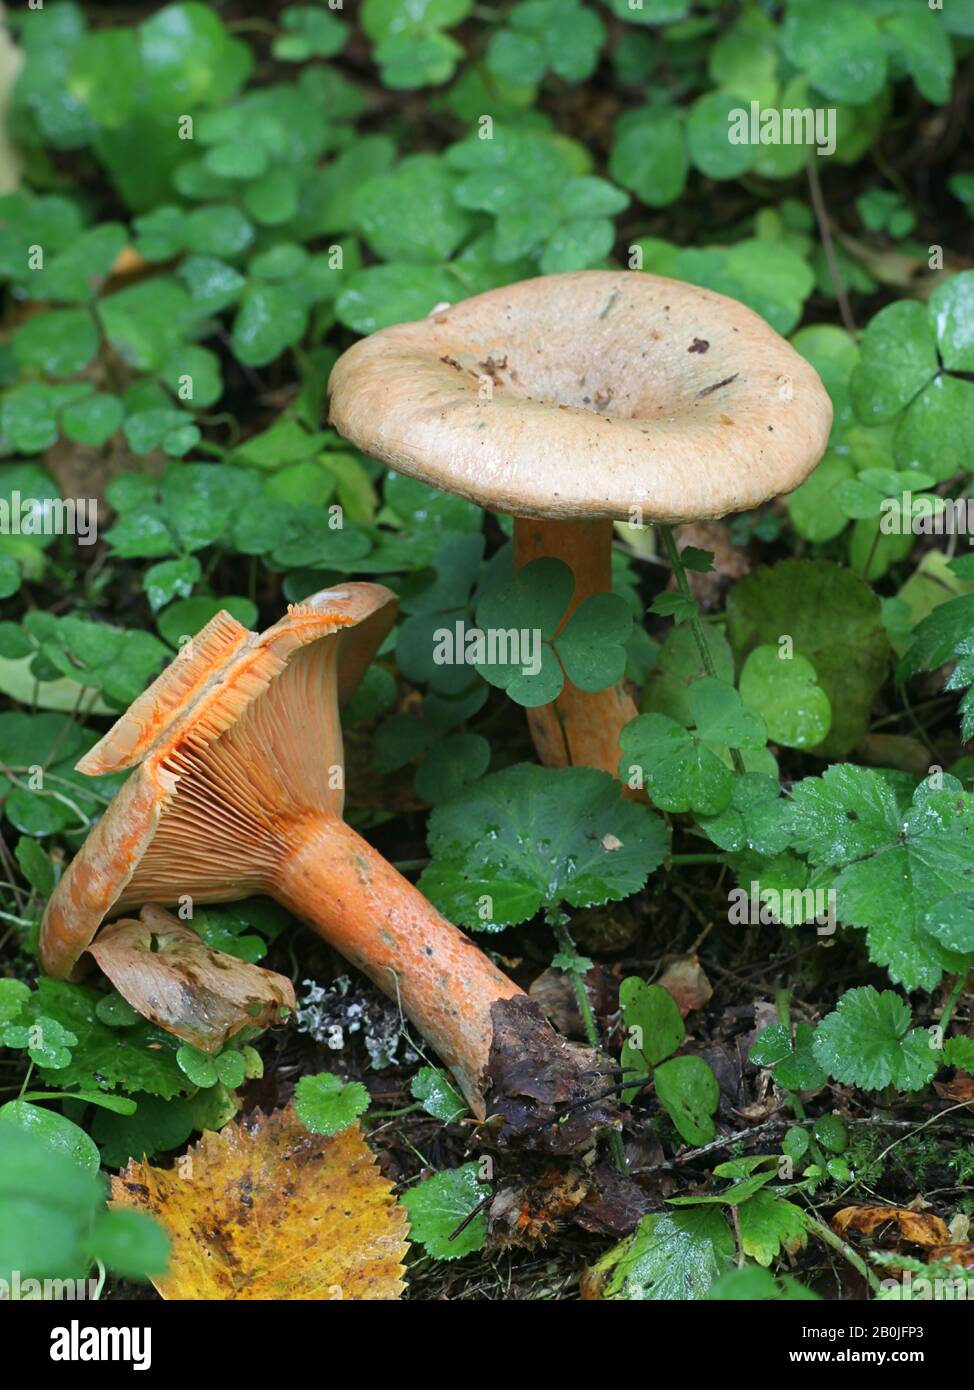 Lactarius deterrimus, known as false saffron milkcap or orange milkcap  Stock Photo - Alamy